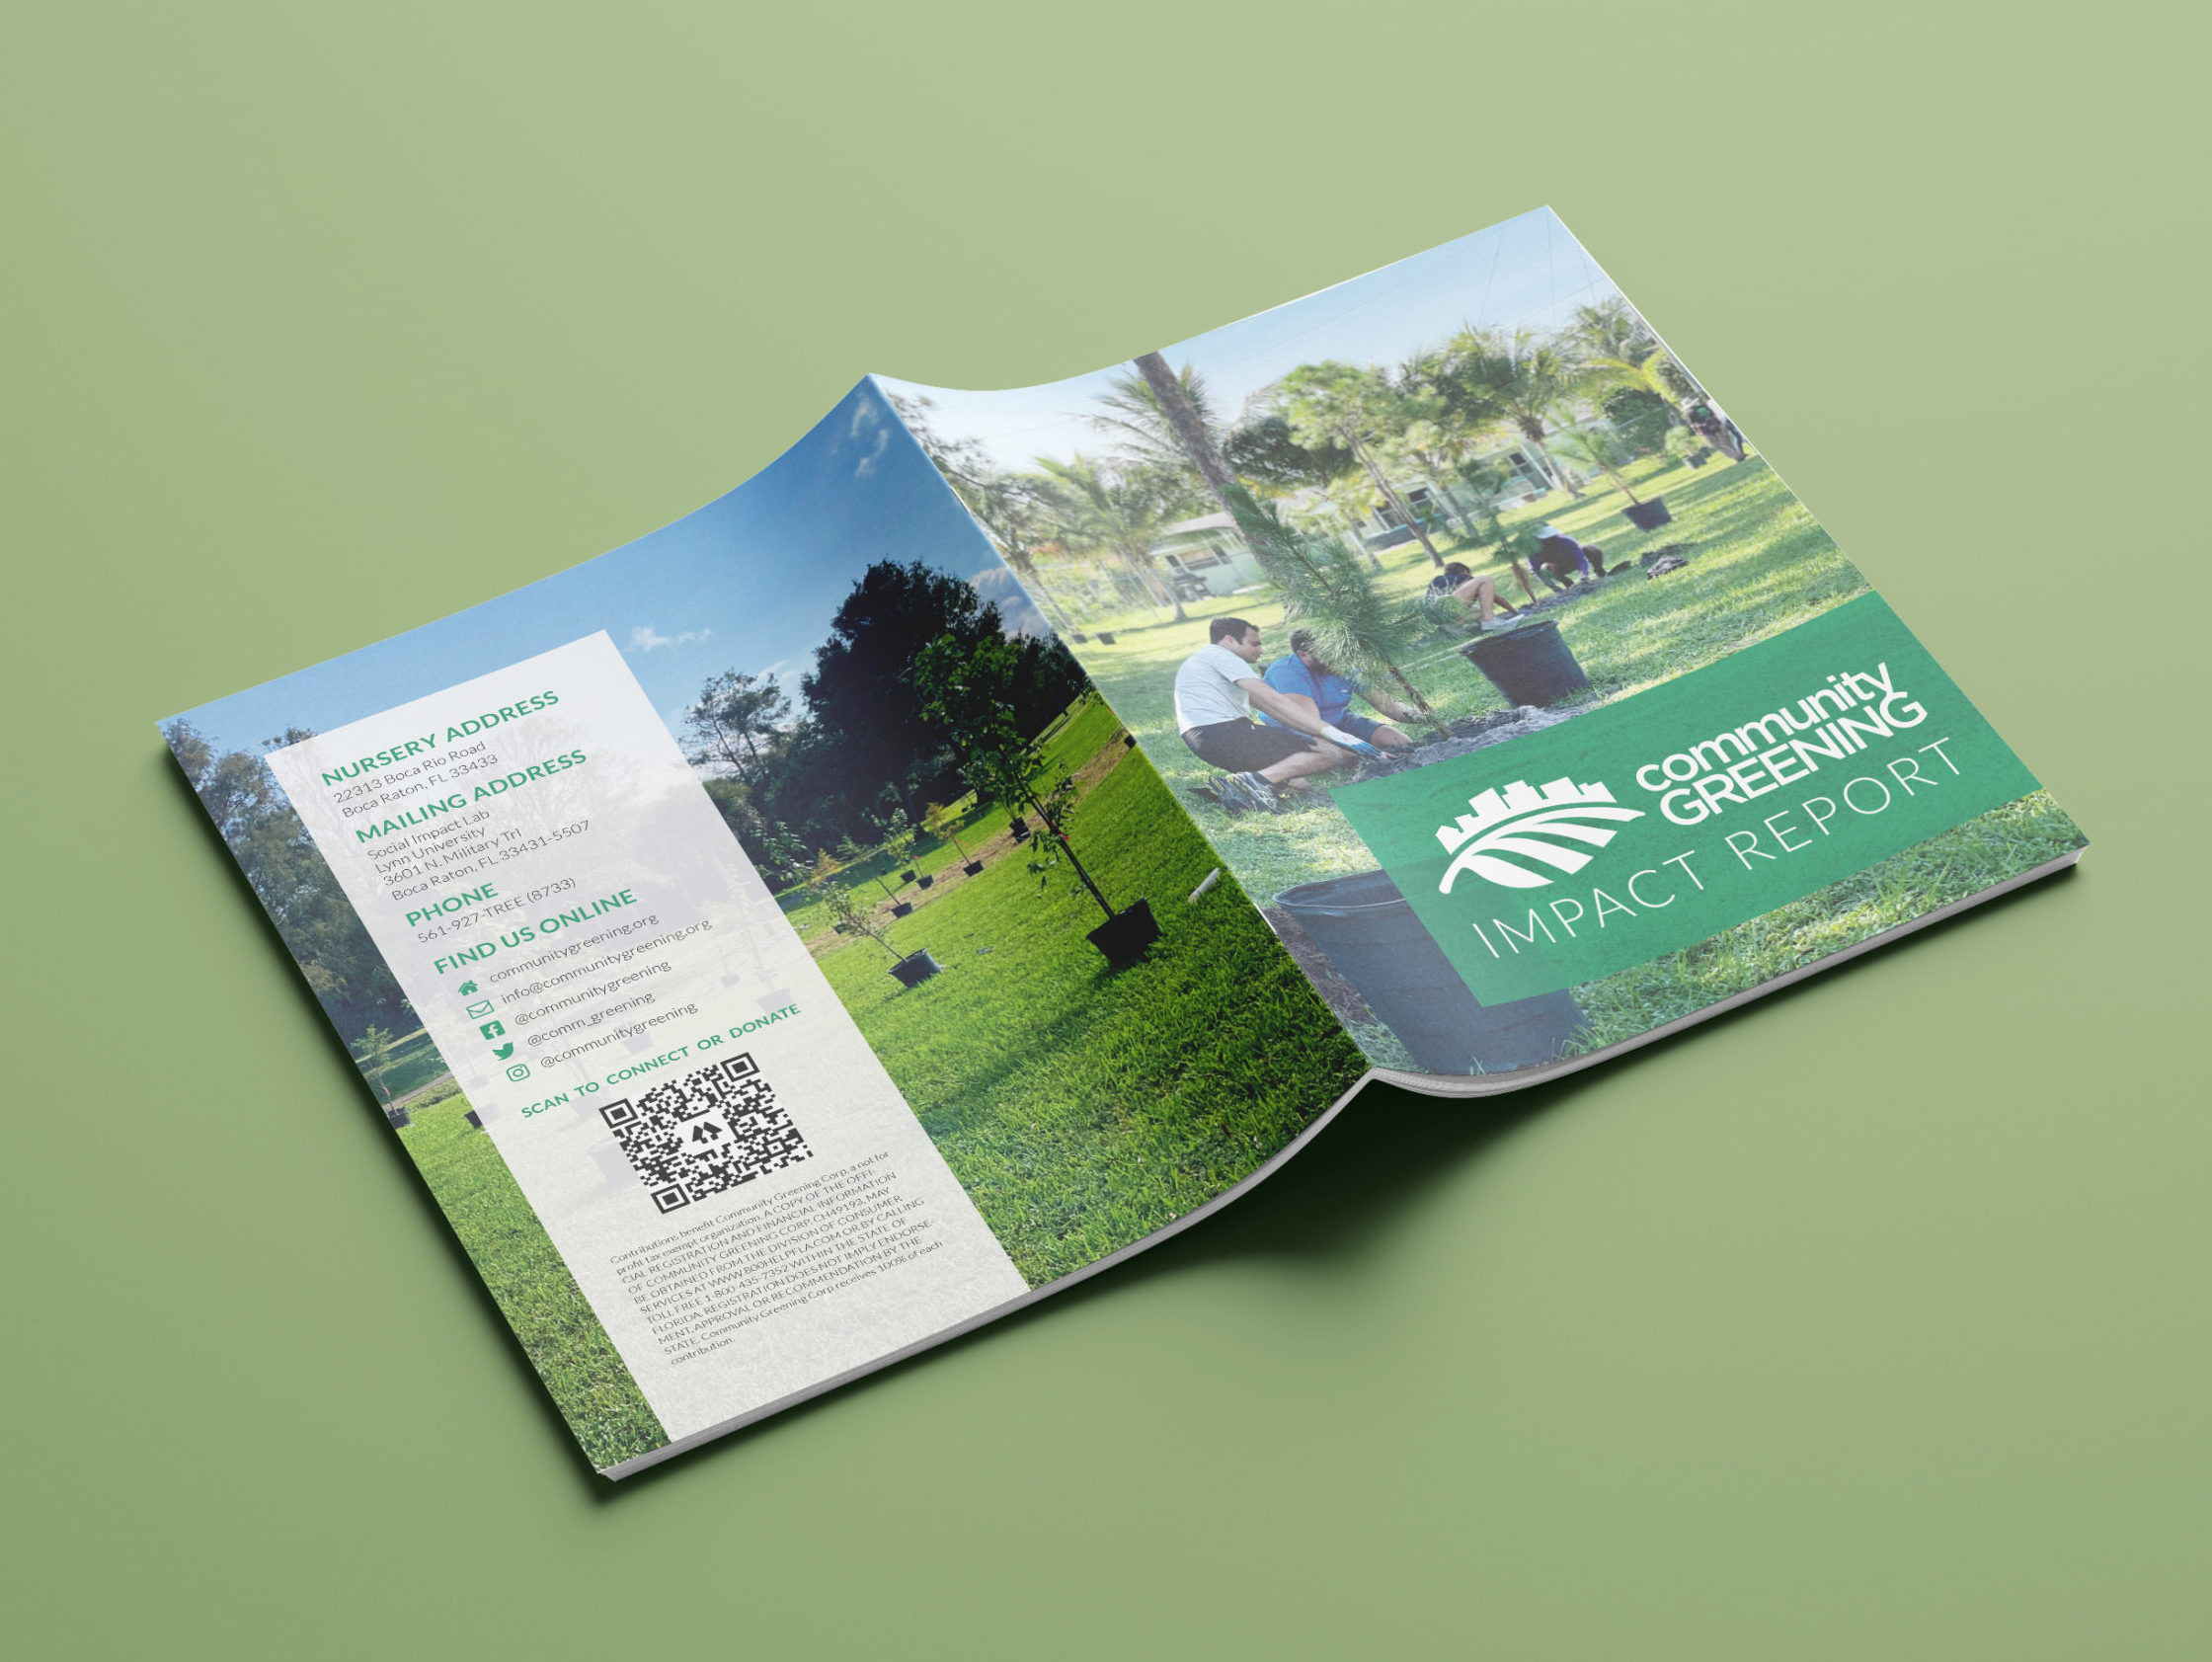 Community Greening covers